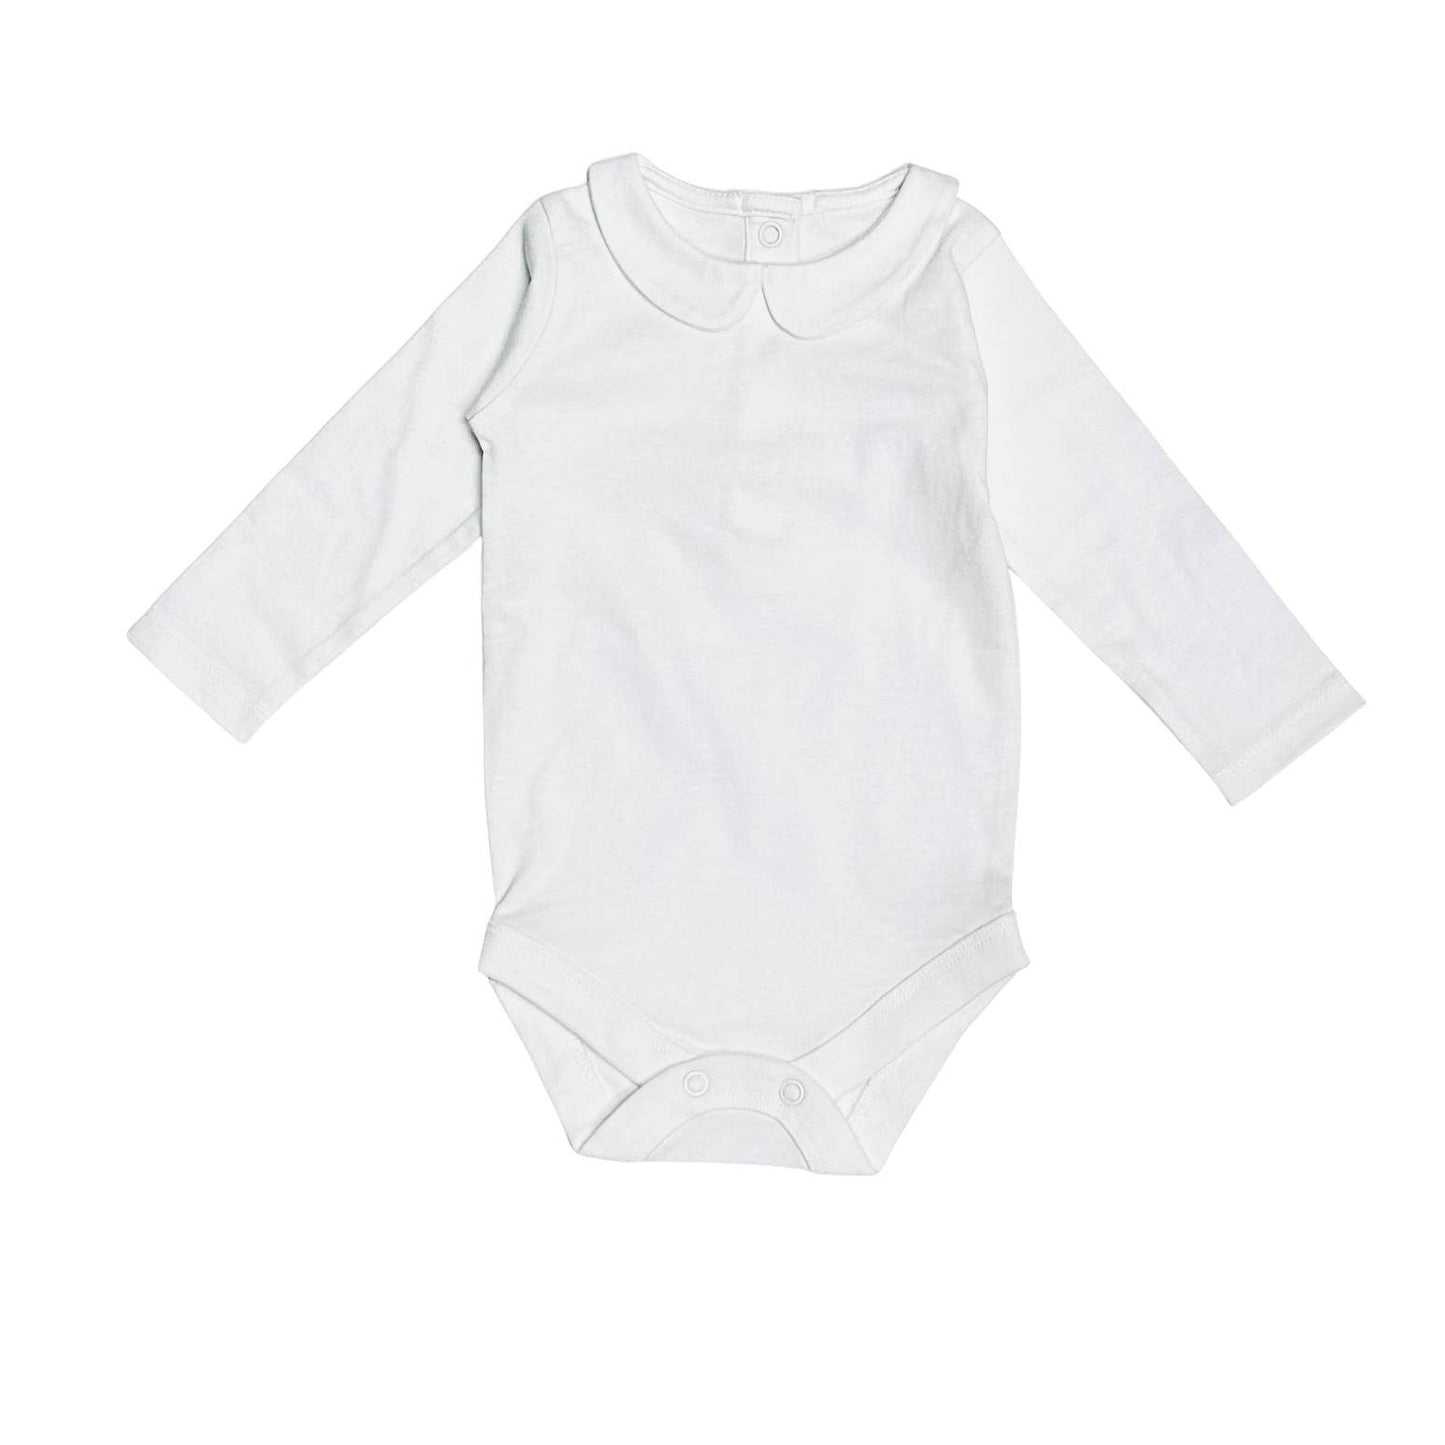 White Long Sleeve Peter Pan Baby Bodysuit